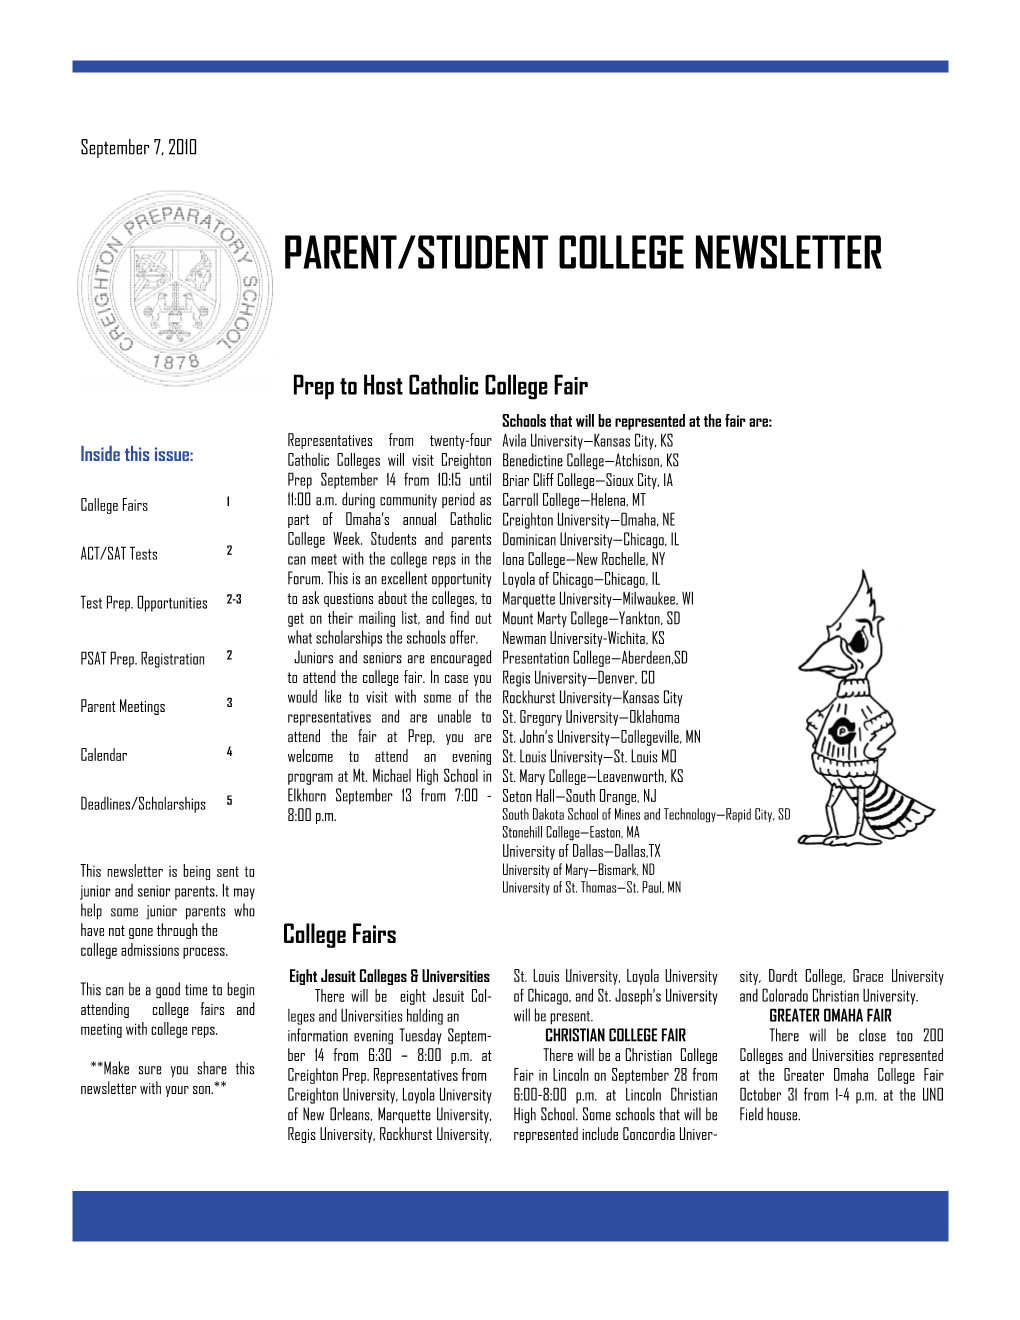 Parent/Student College Newsletter